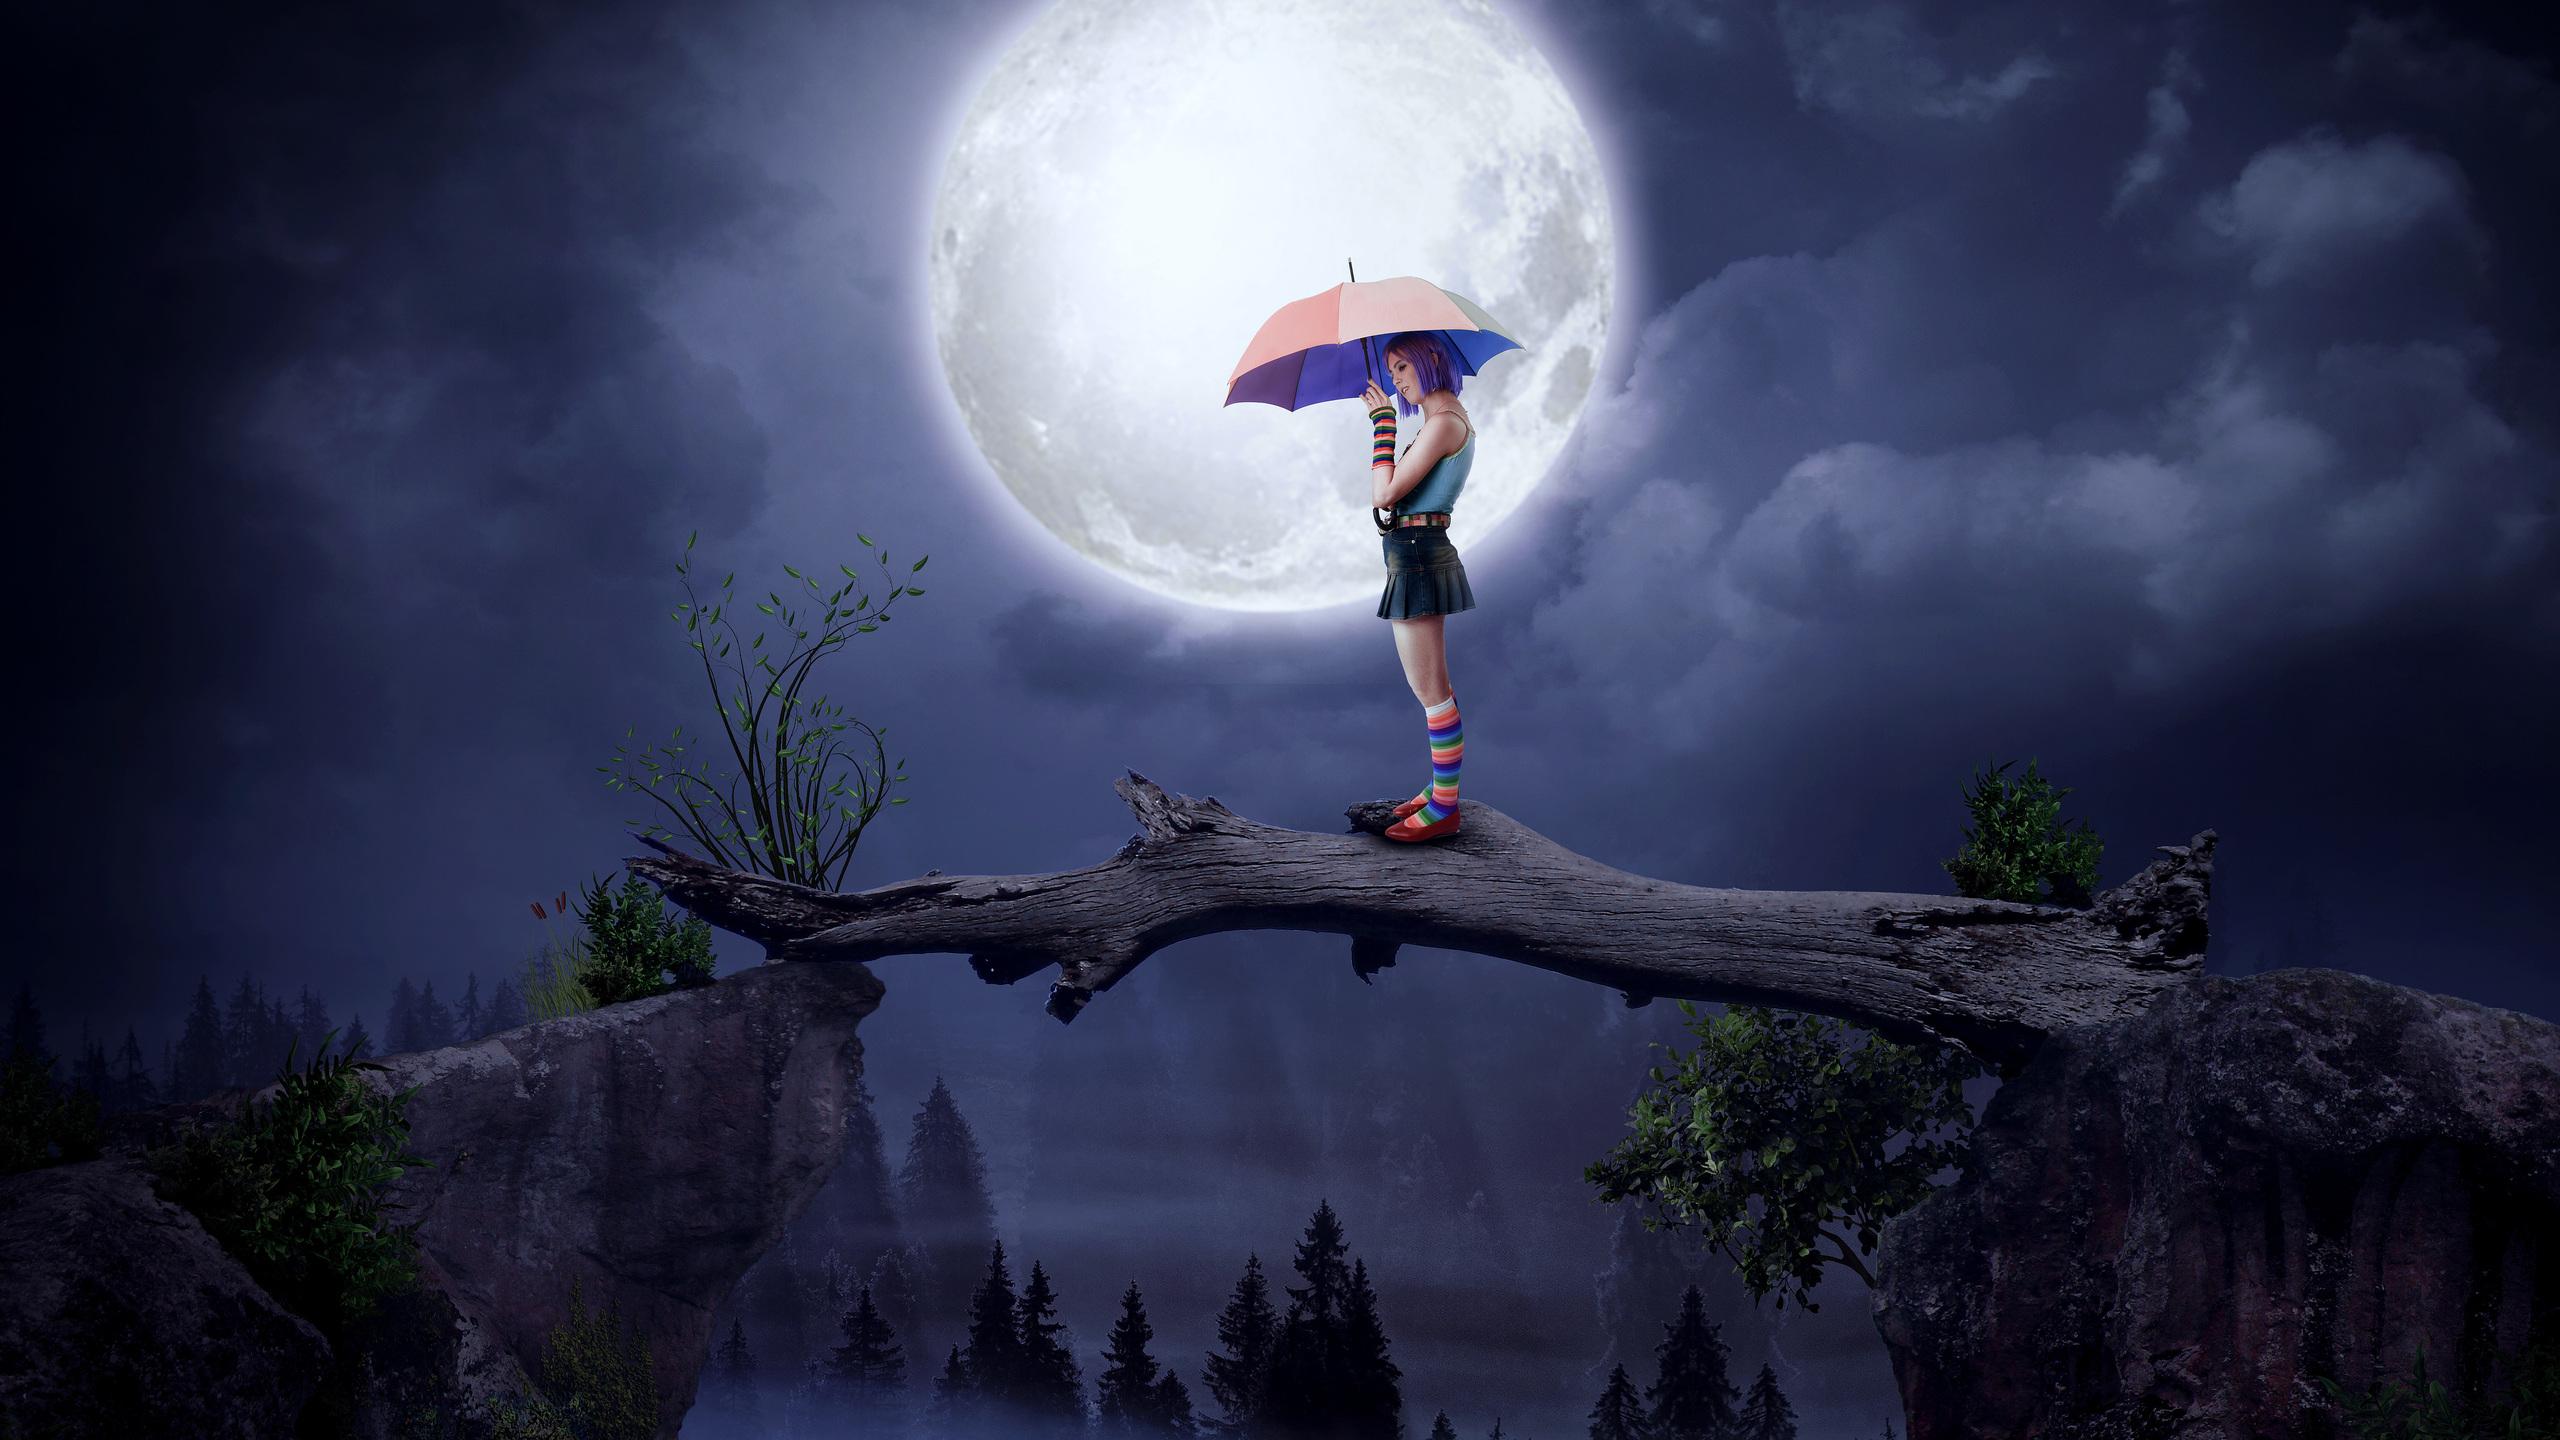 Girl With Umbrella Big Moon Digital Art 5k 1440P